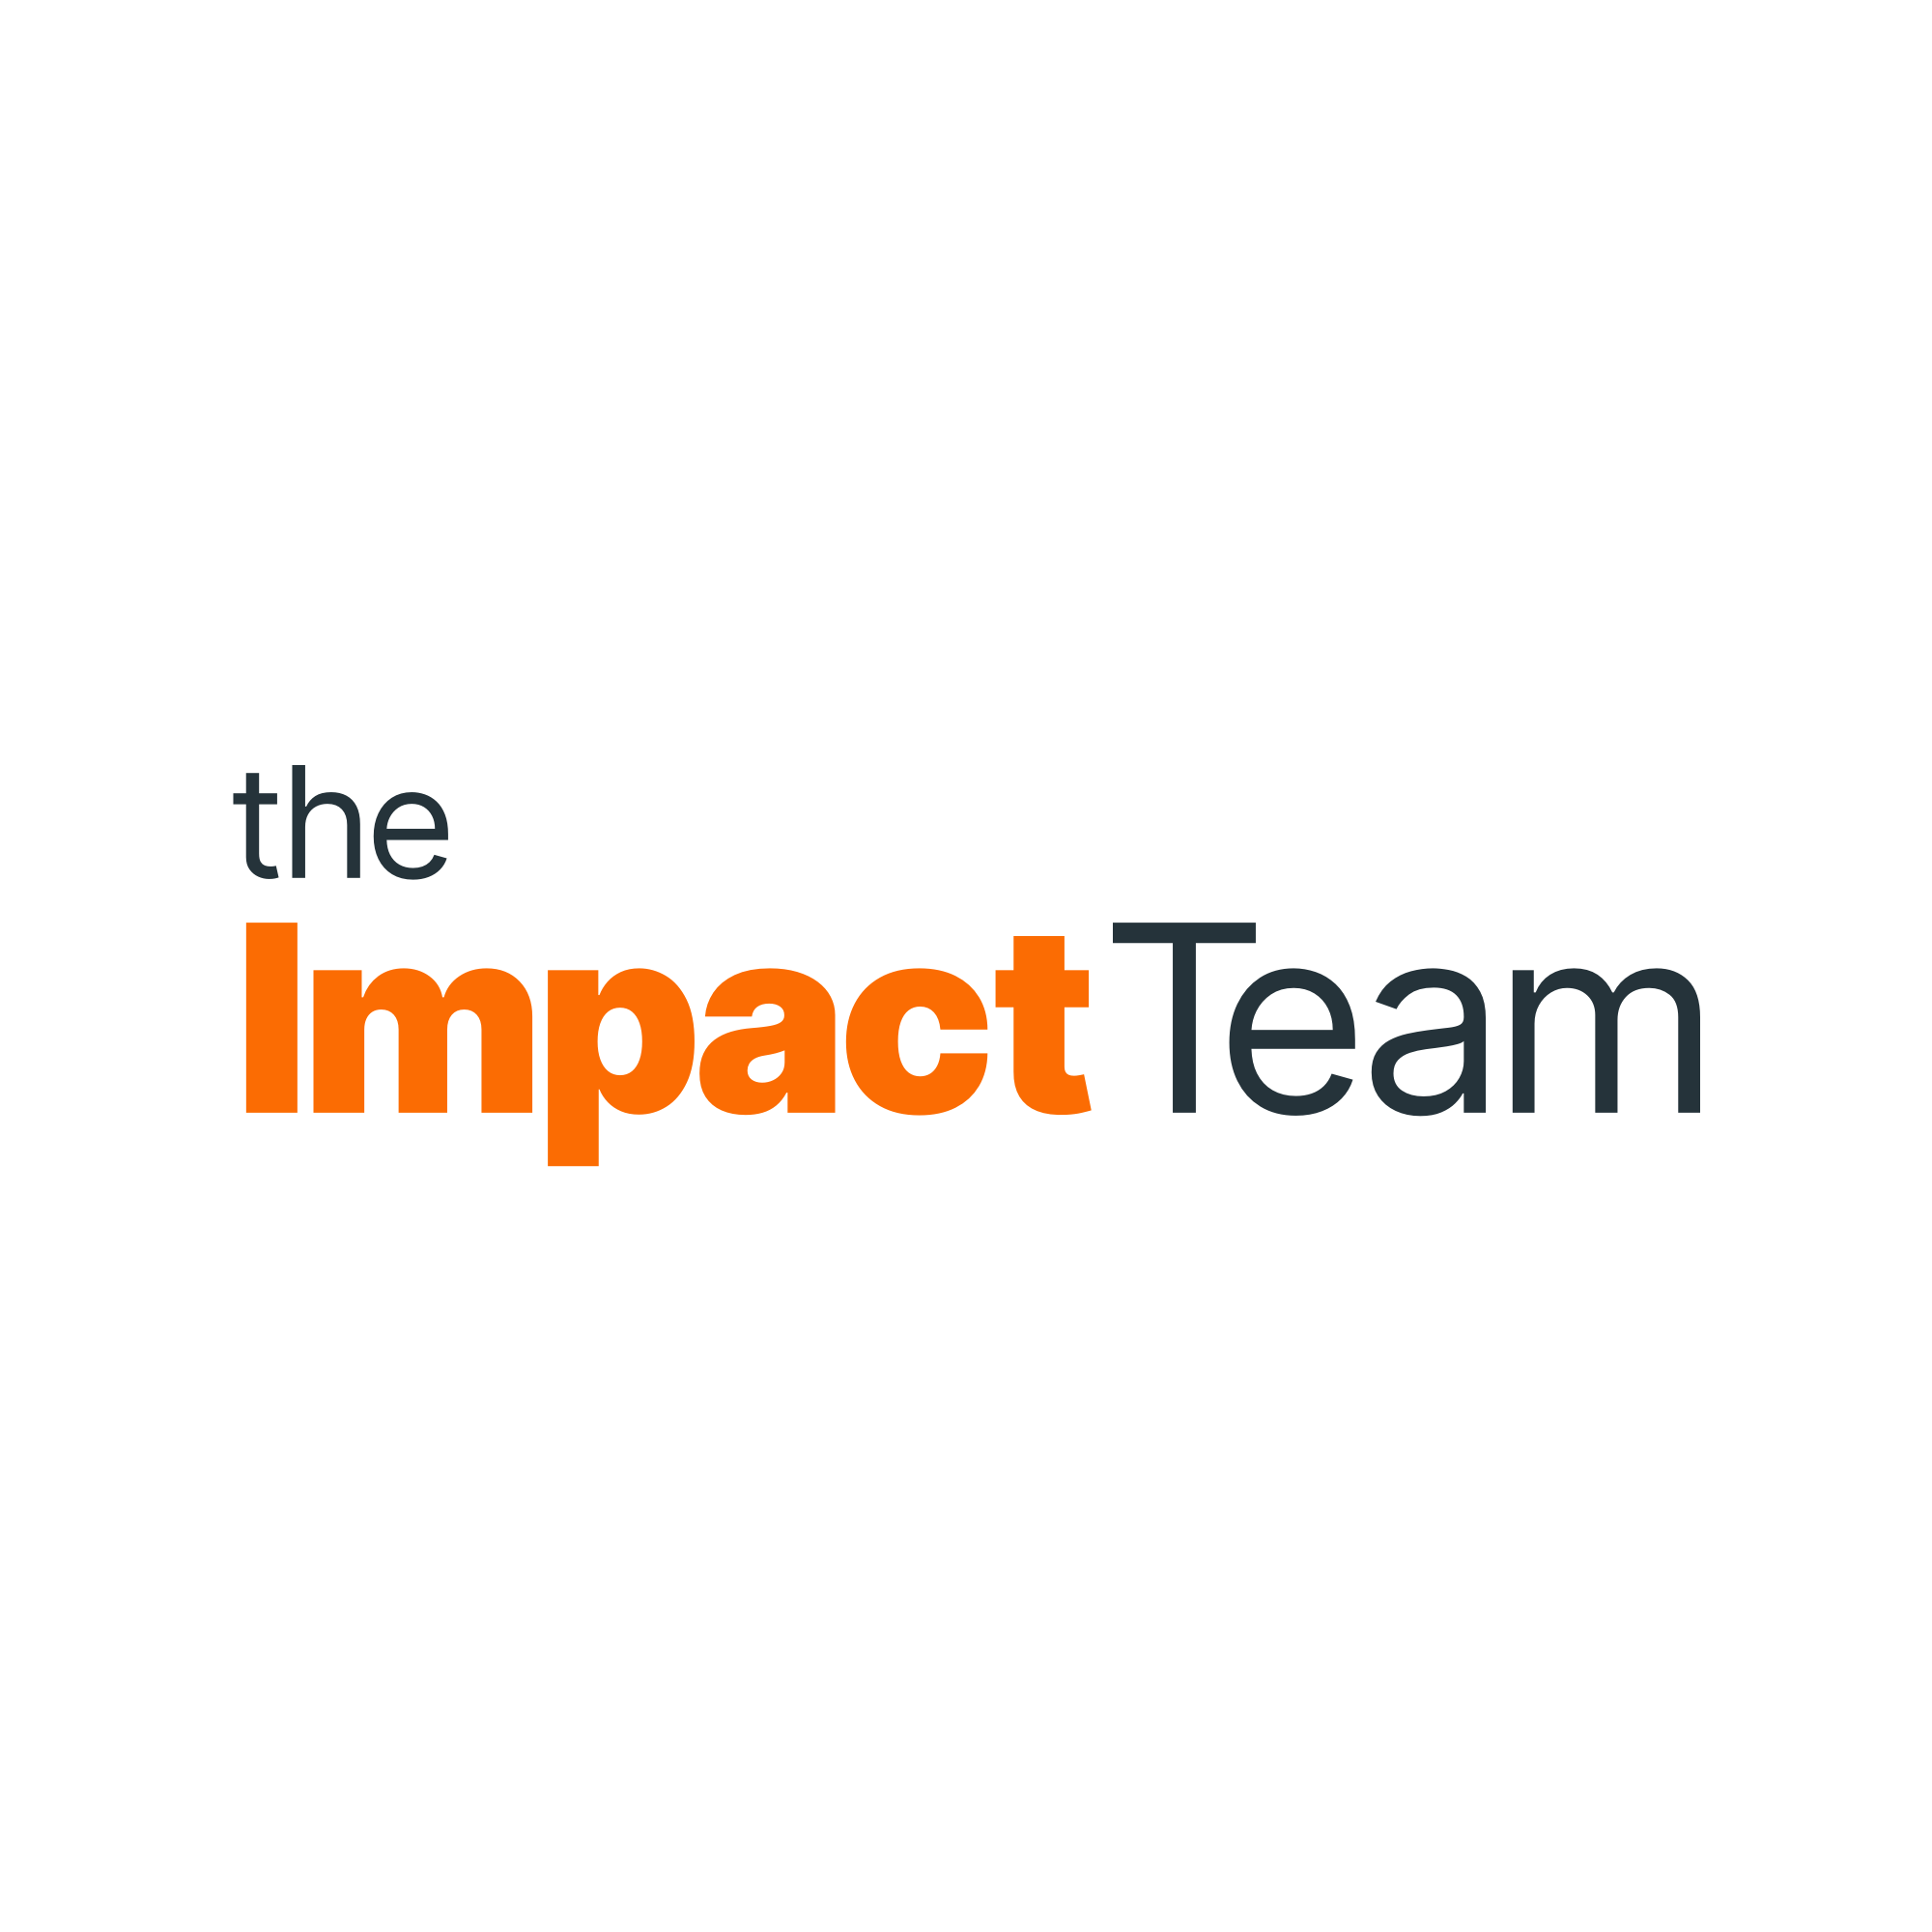 the Impact Team